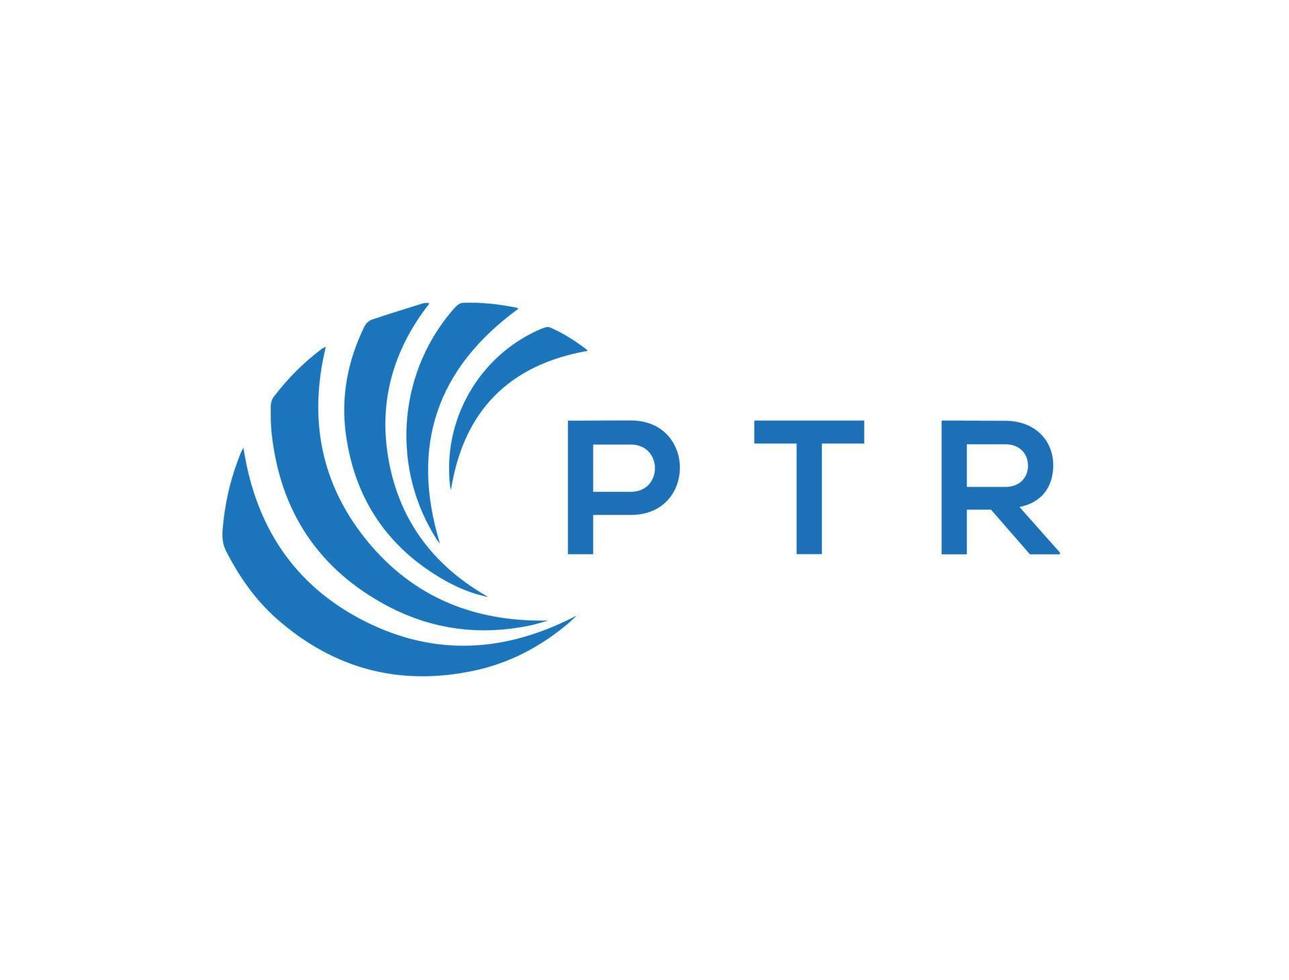 ptr brief logo ontwerp Aan wit achtergrond. ptr creatief cirkel brief logo concept. ptr brief ontwerp. vector